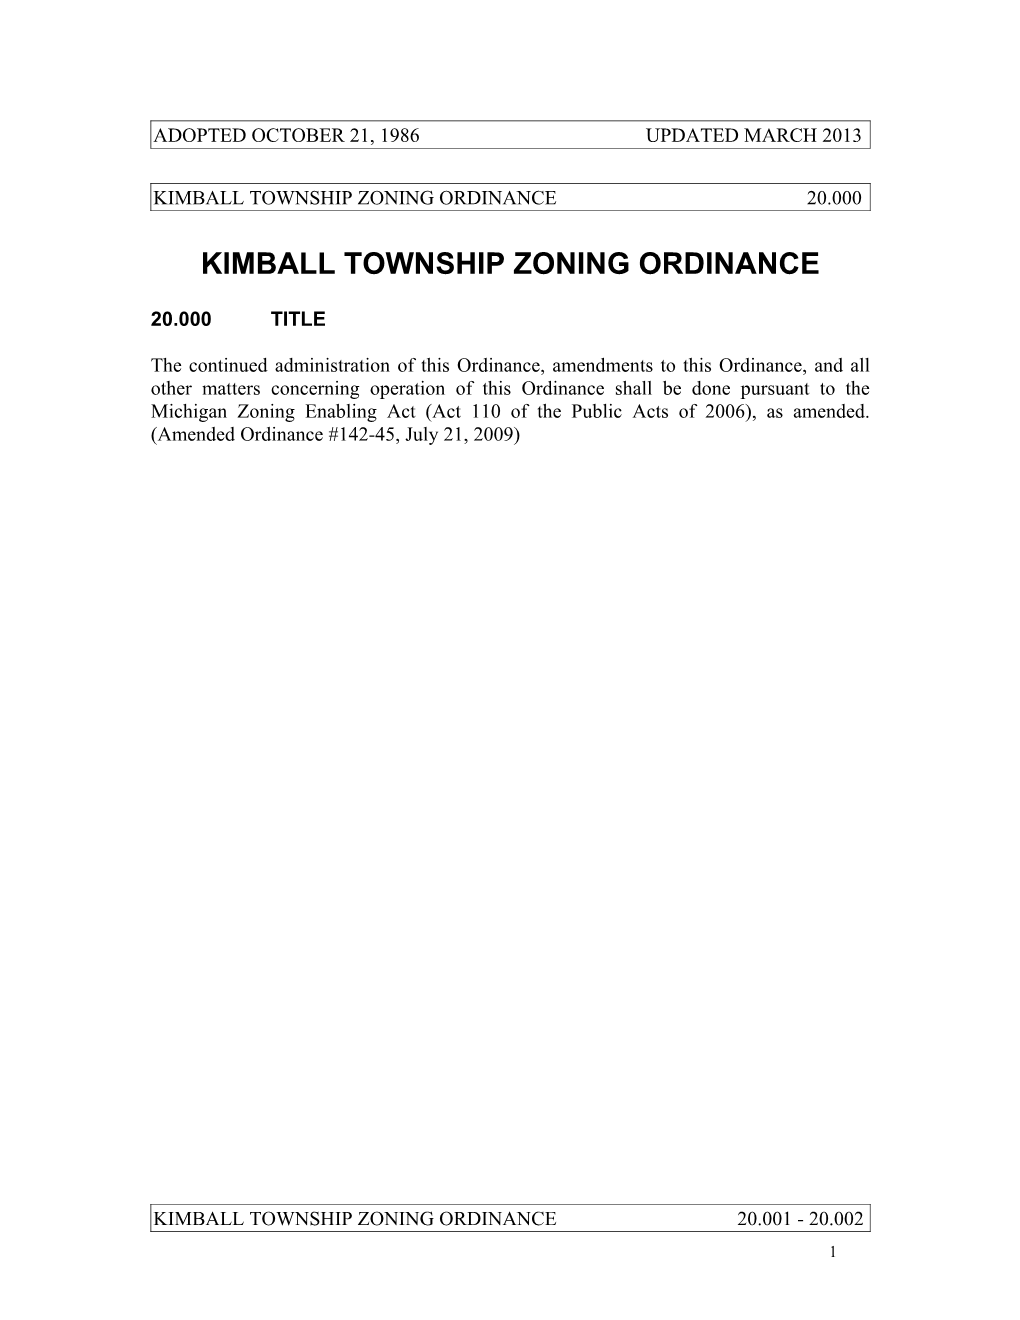 Kimball Township Zoning Ordinance